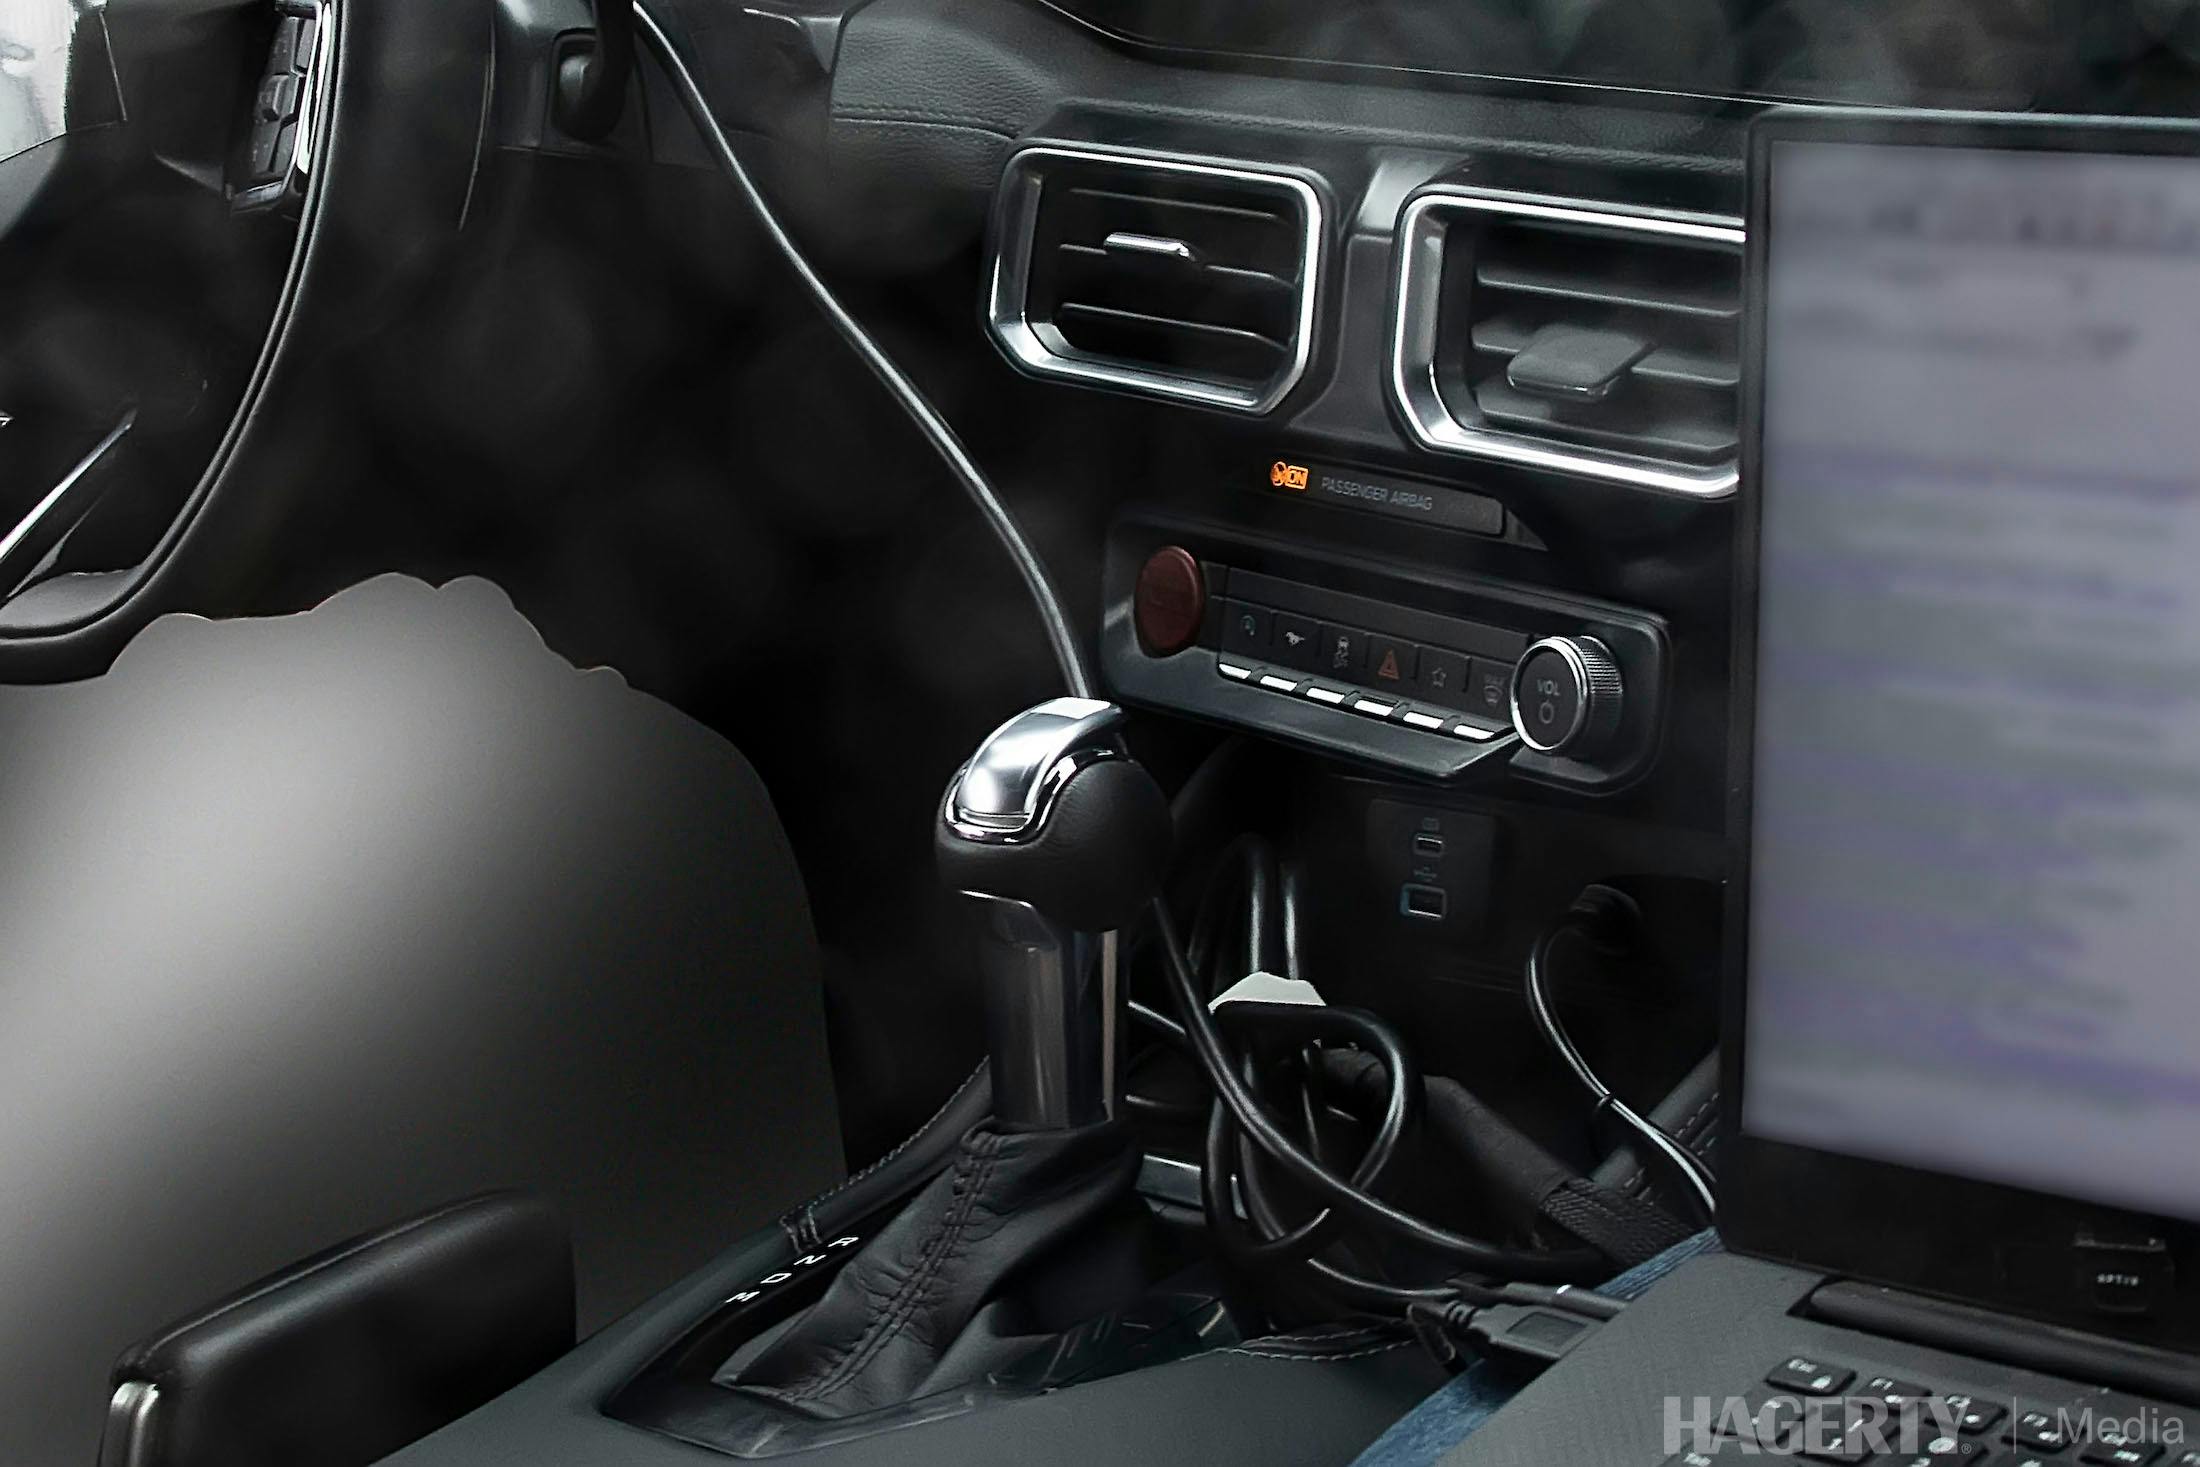 Mustang interior spy shot center console close